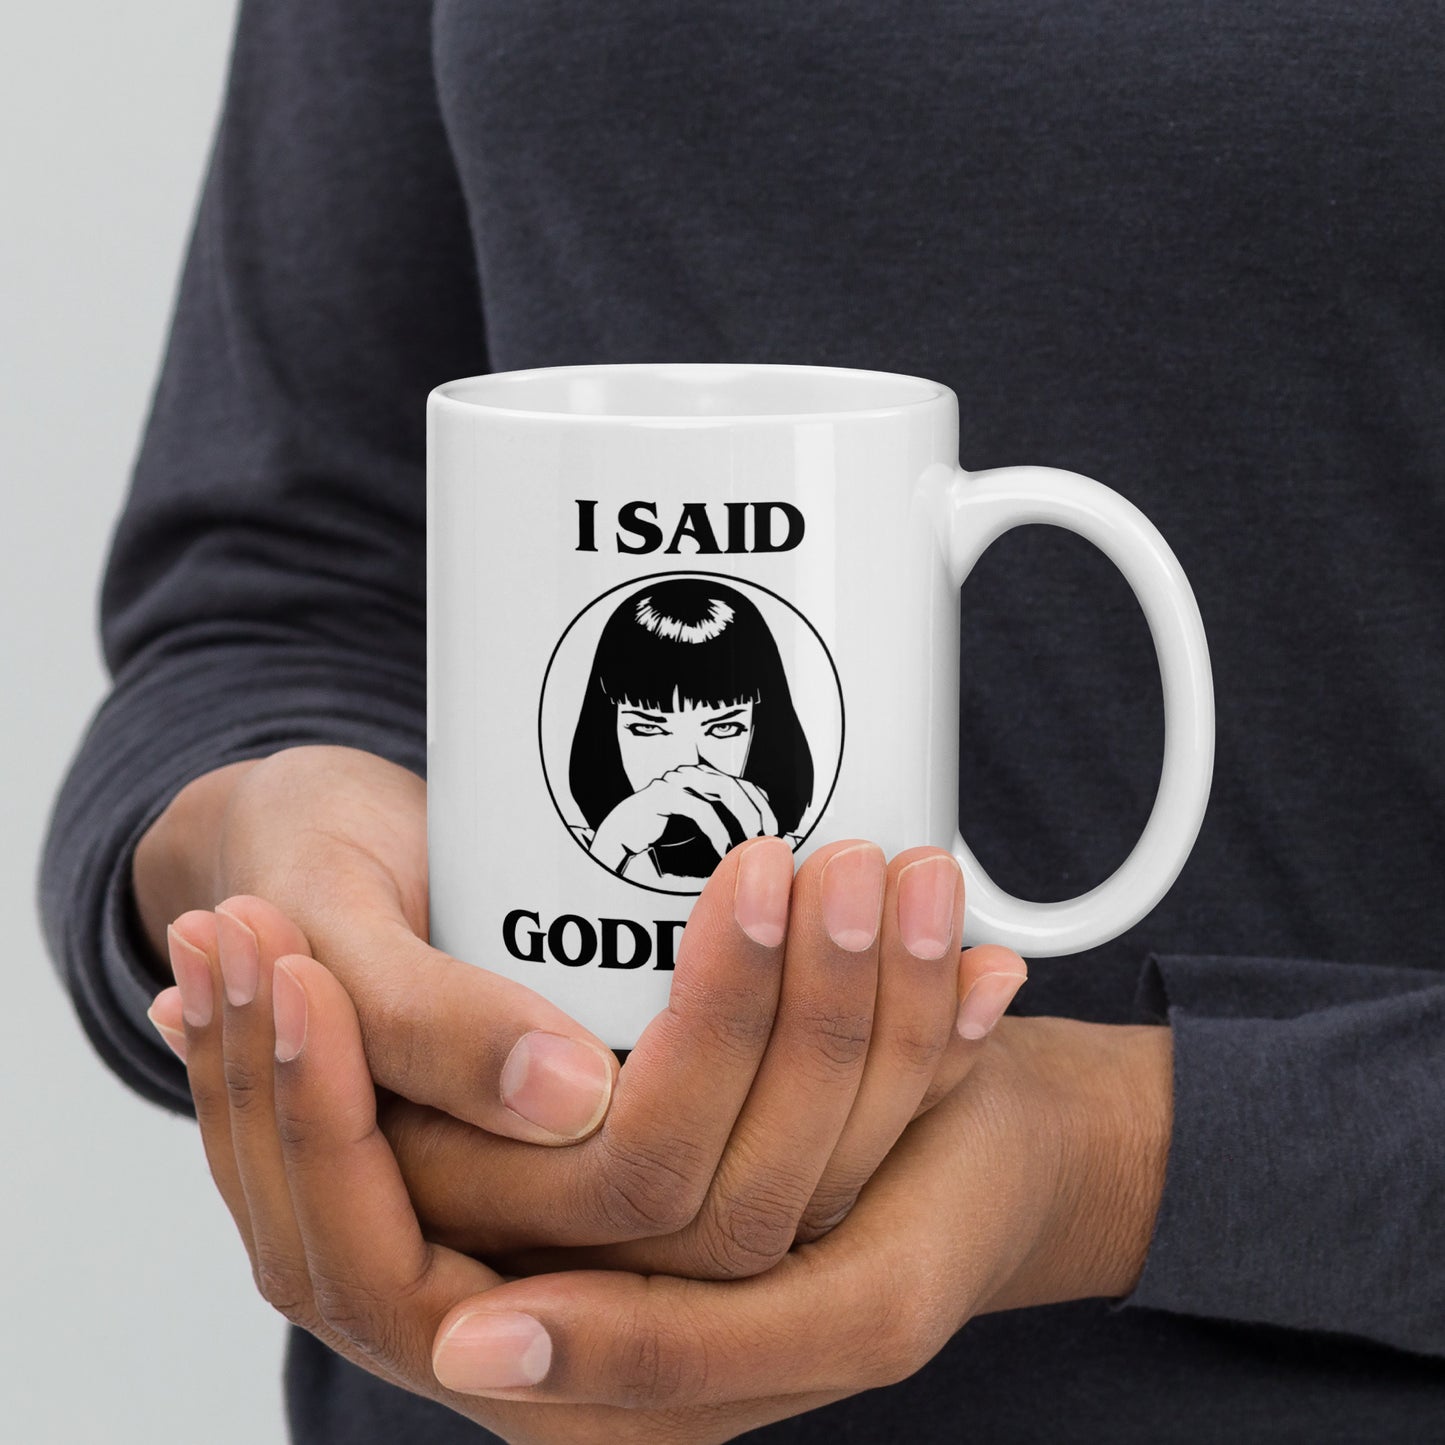 I Said Goddamn Mia Wallace - Ceramic Coffee Mug Printify